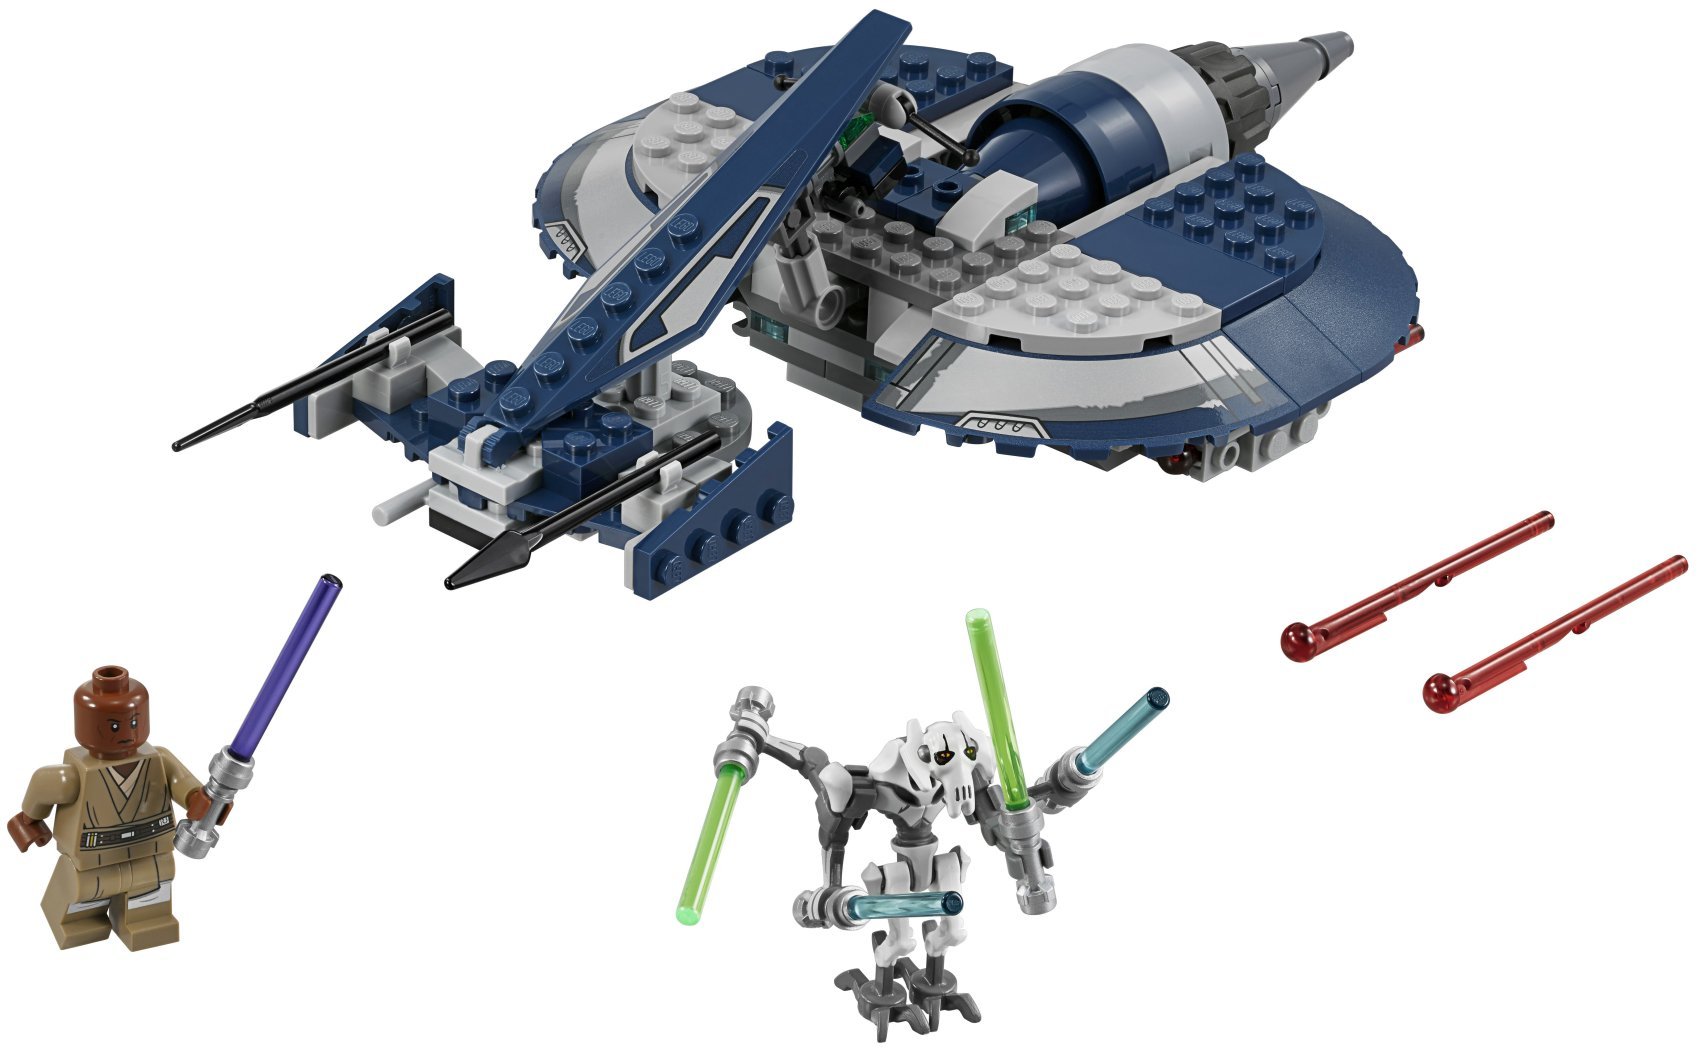 Lego Star Wars General Grievous' Combat Speeder 75199 NEW